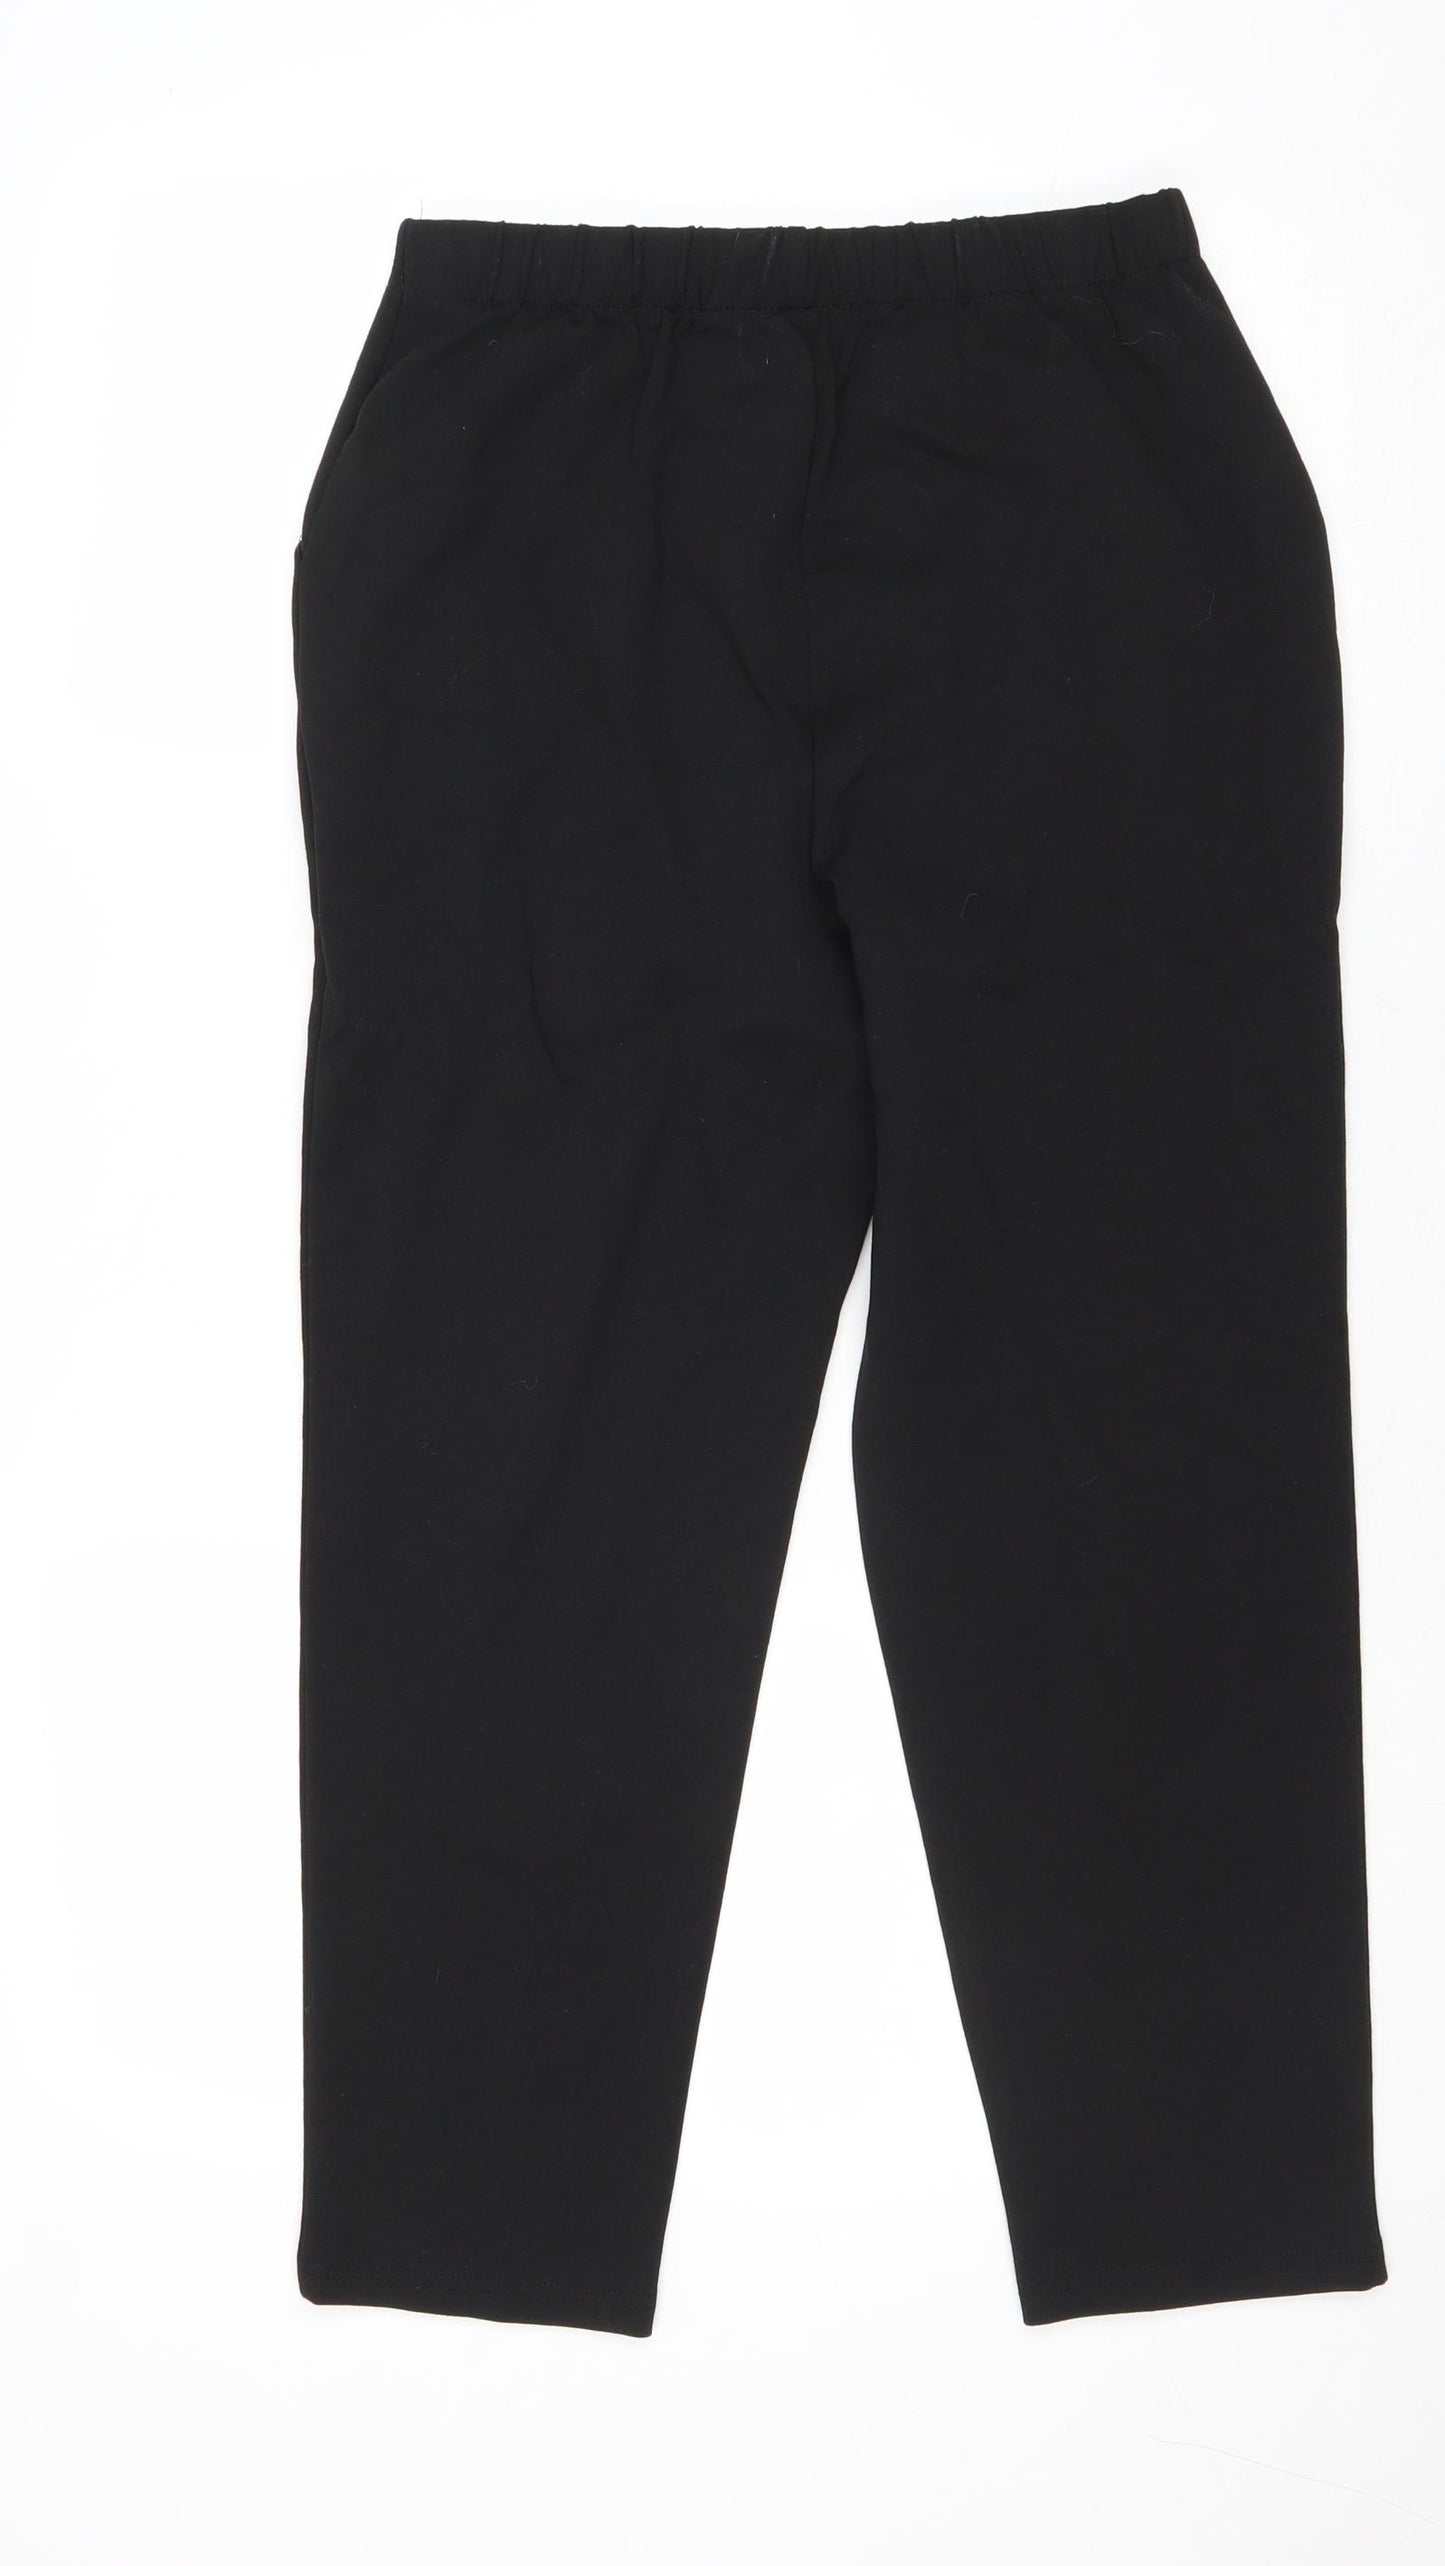 ASOS Womens Black Polyester Carrot Trousers Size 10 Regular